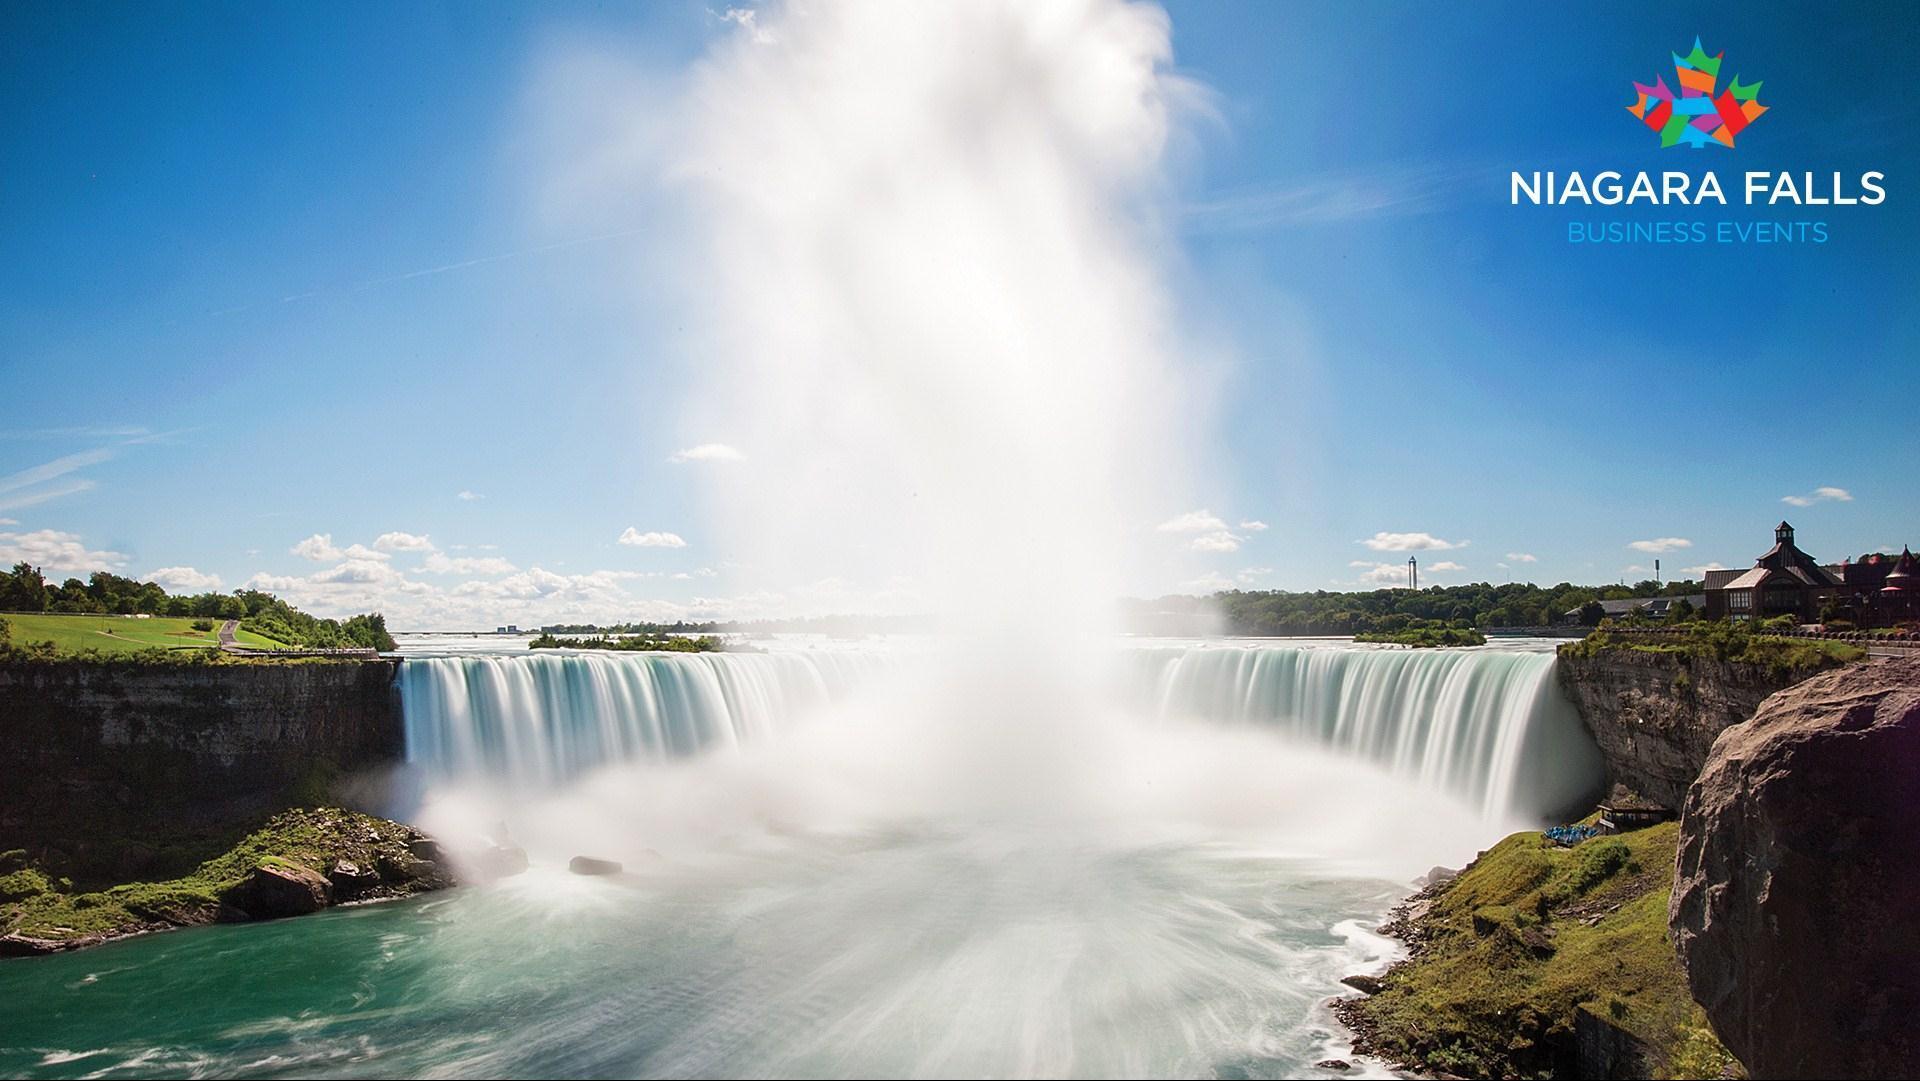 Niagara Falls Tourism Business Events in Niagara Falls, ON